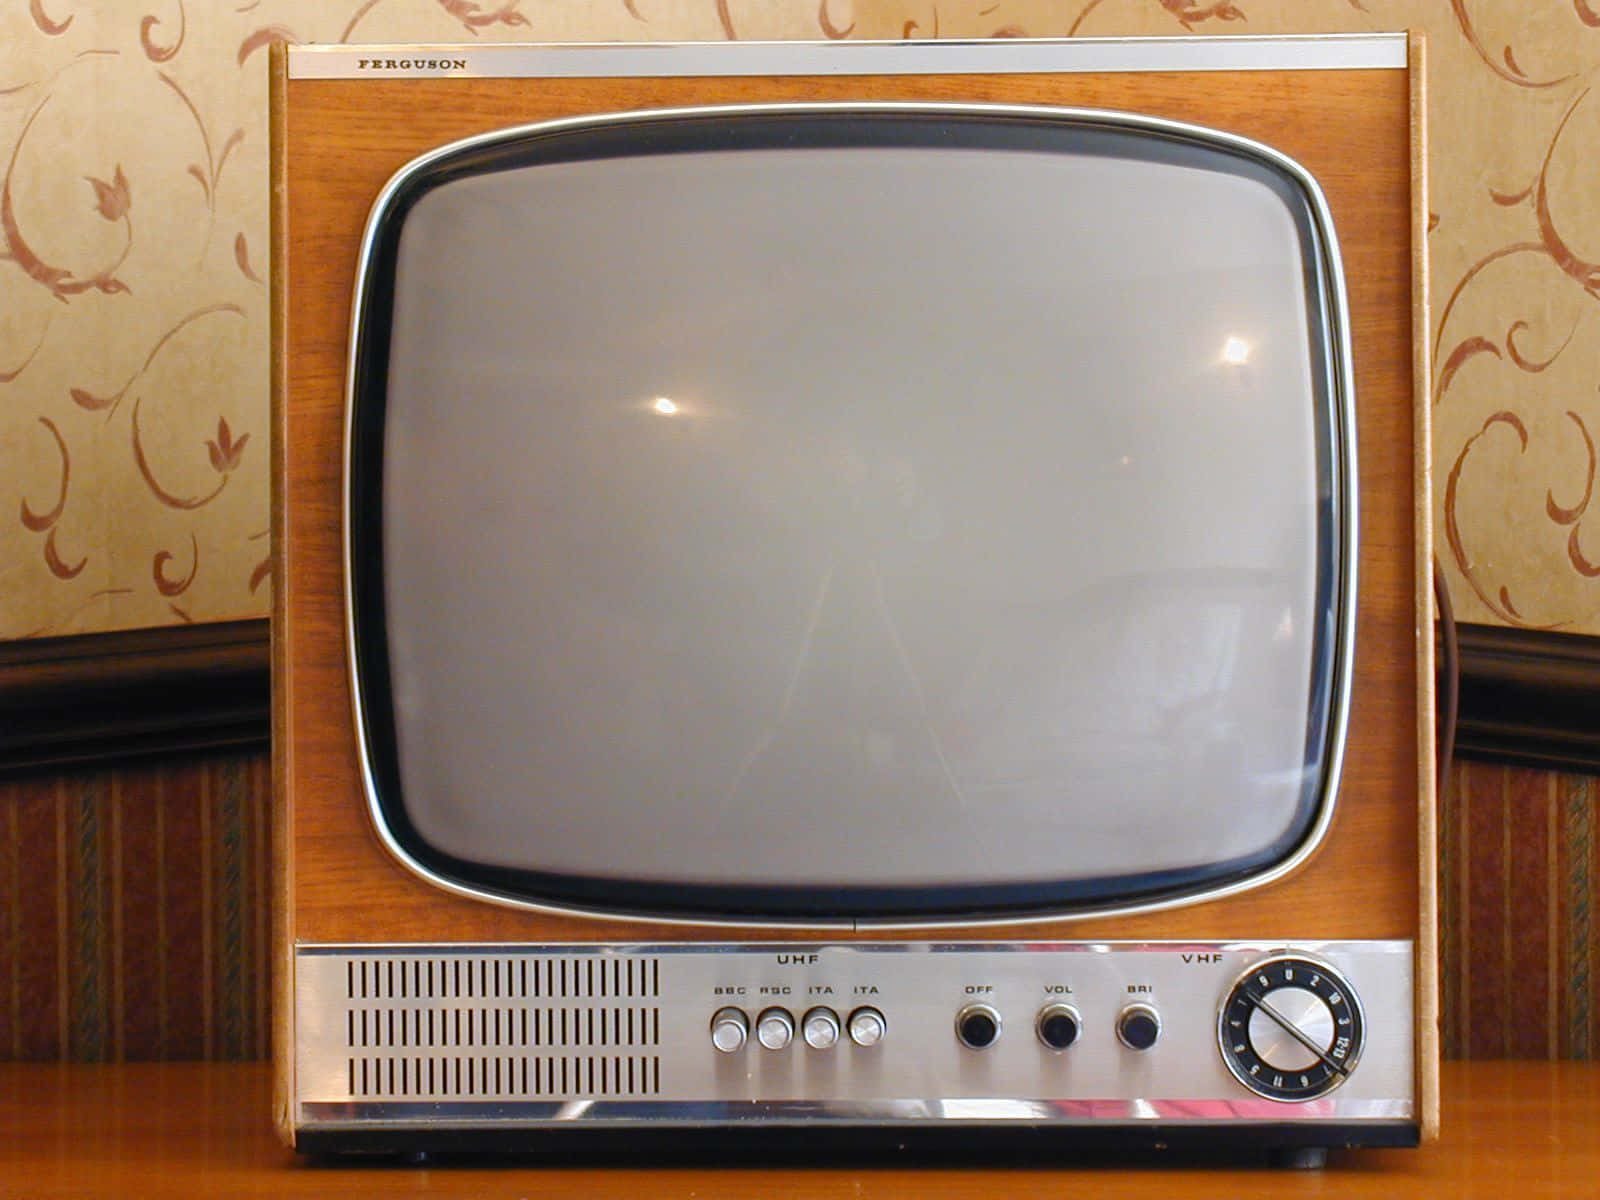 Телевизор кв 1. Старый телевизор. Старинный телевизор. Квадратный телевизор. Ретро телевизор.